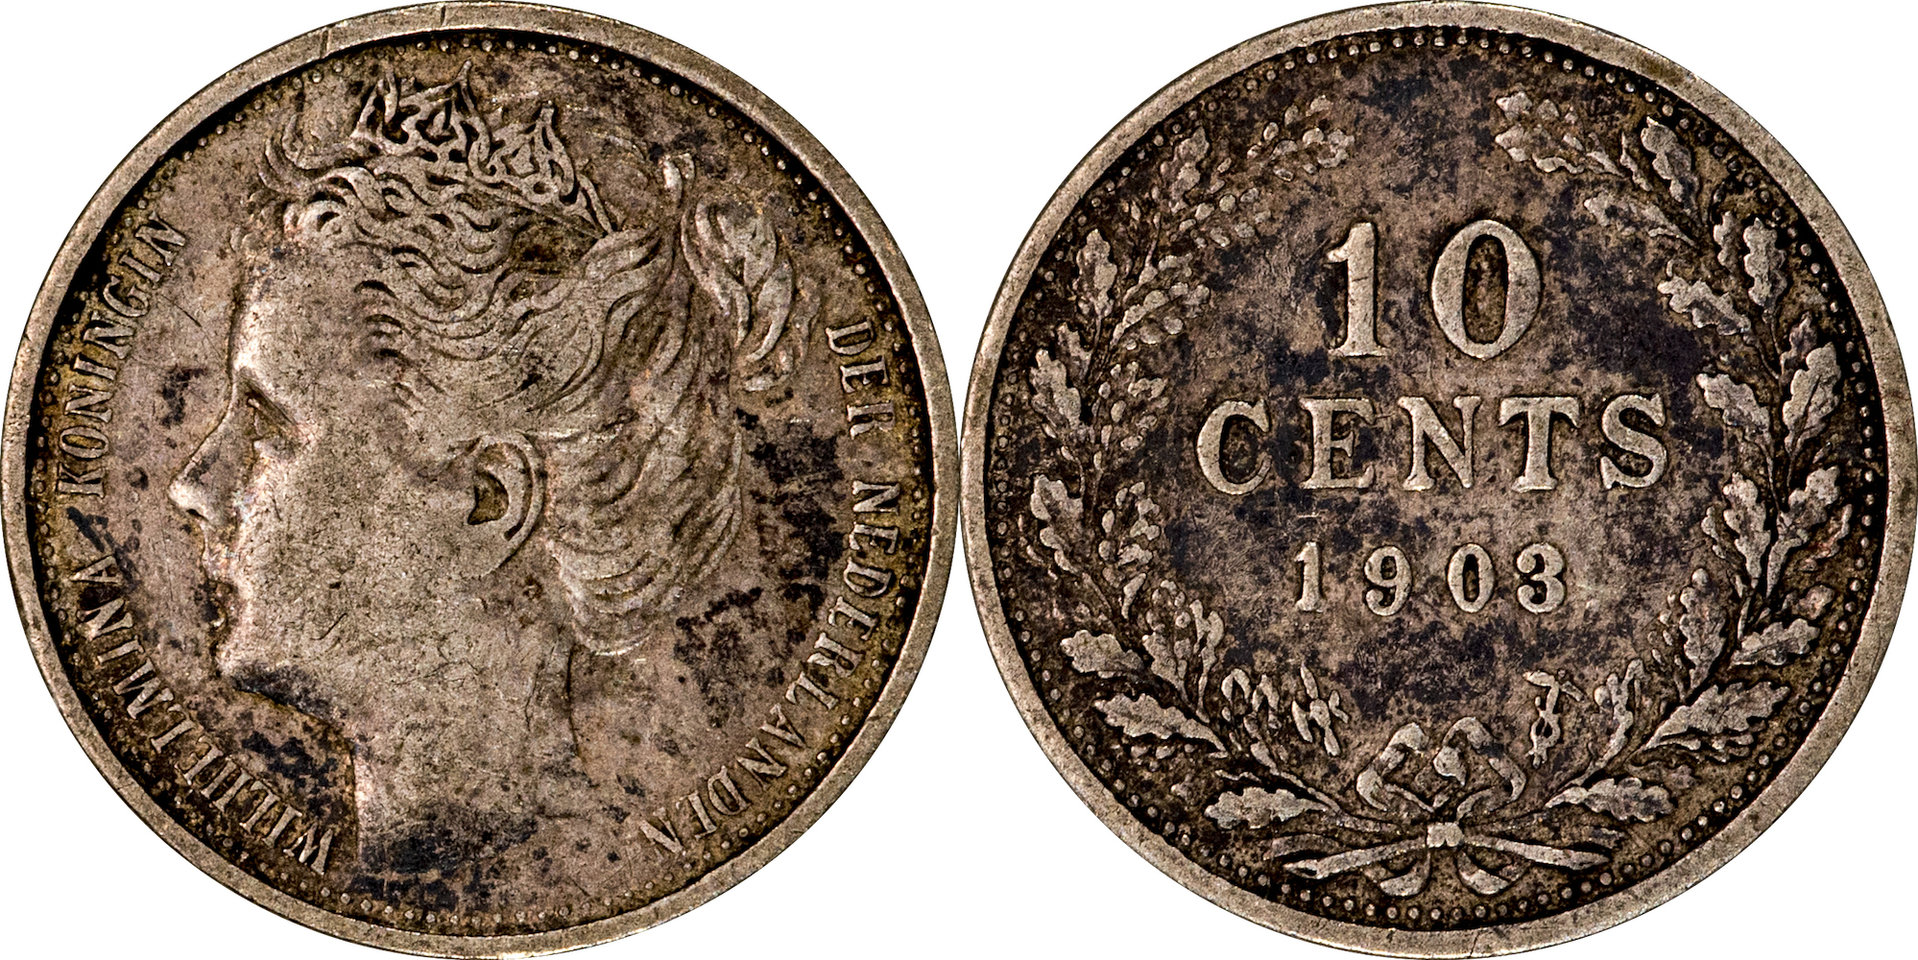 Netherlands - 1903 10 Cents.jpg